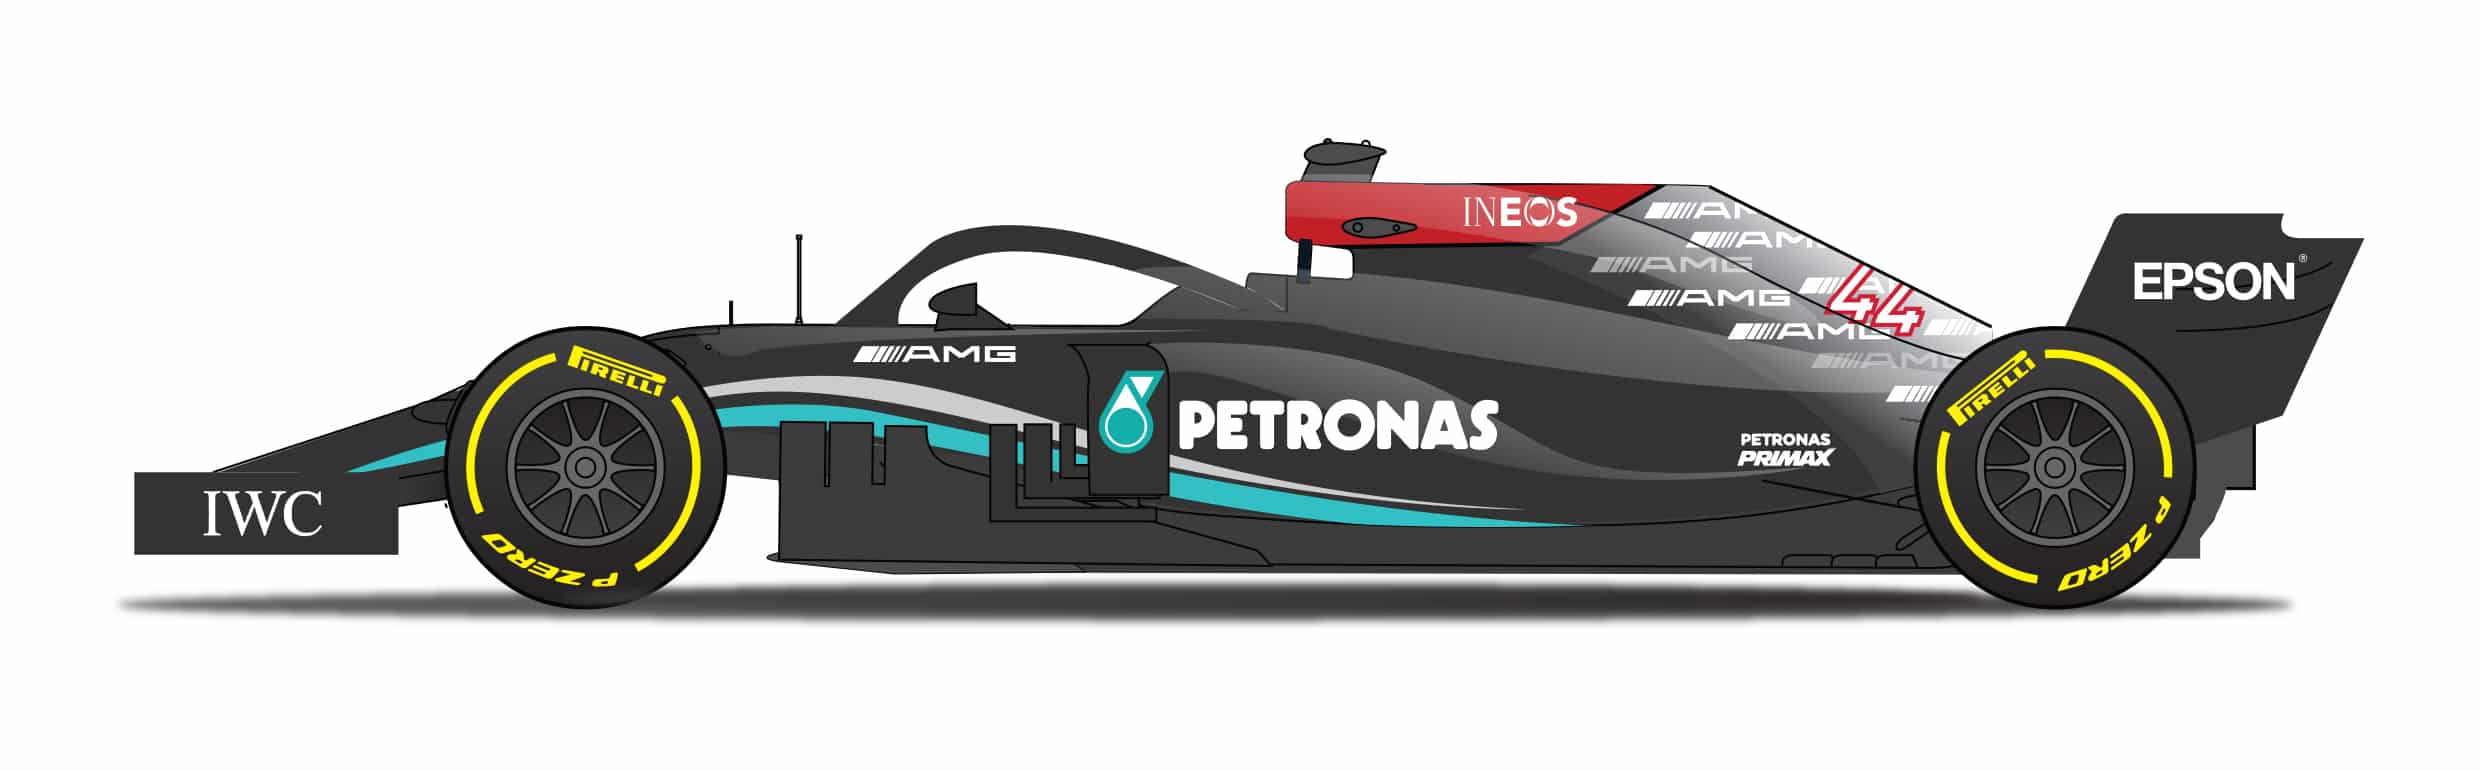 Lewis-Hamilton-Mercedes-side